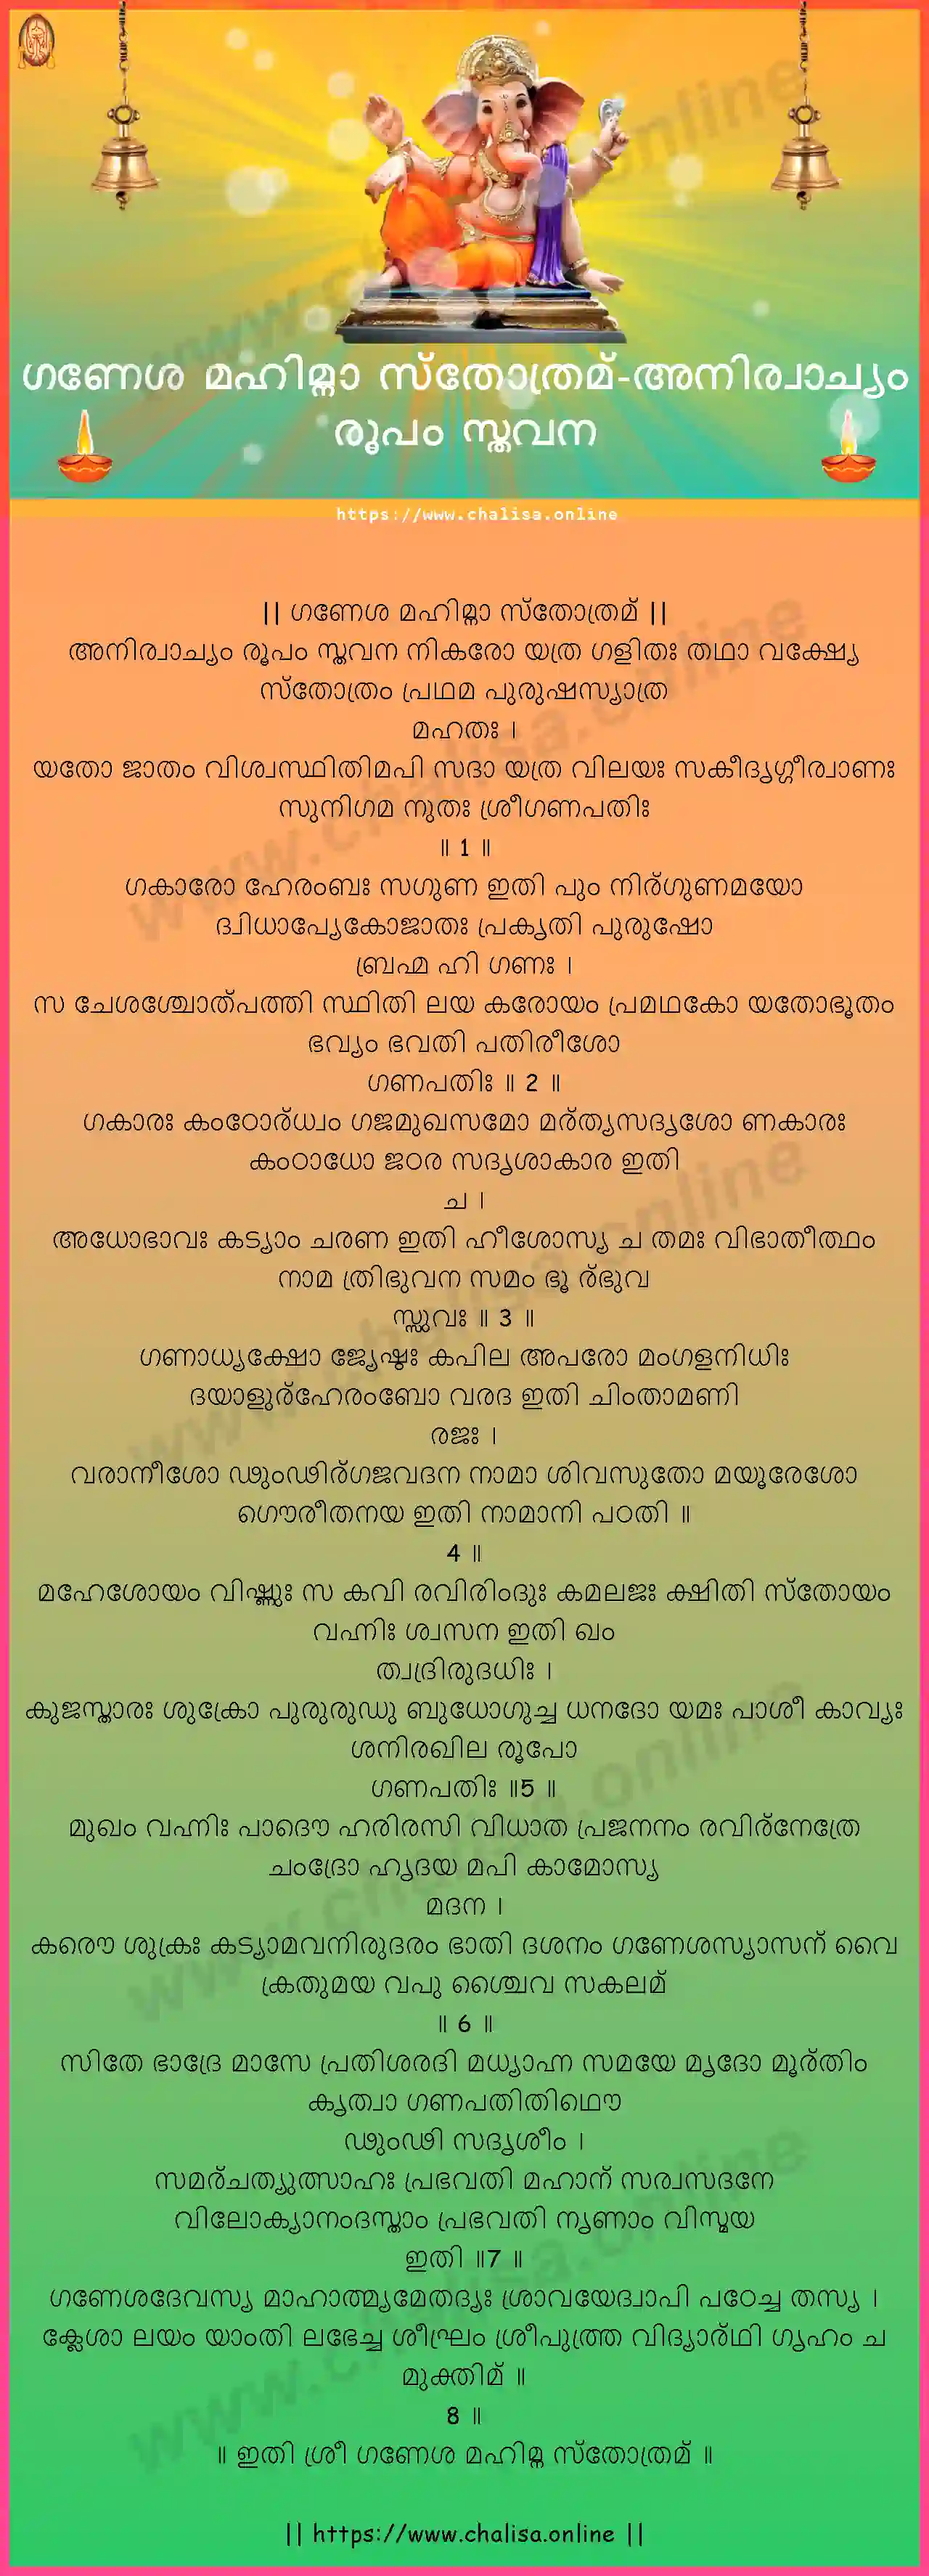 anirvachyam-rupam-ganesha-mahimna-stotram-malayalam-malayalam-lyrics-download